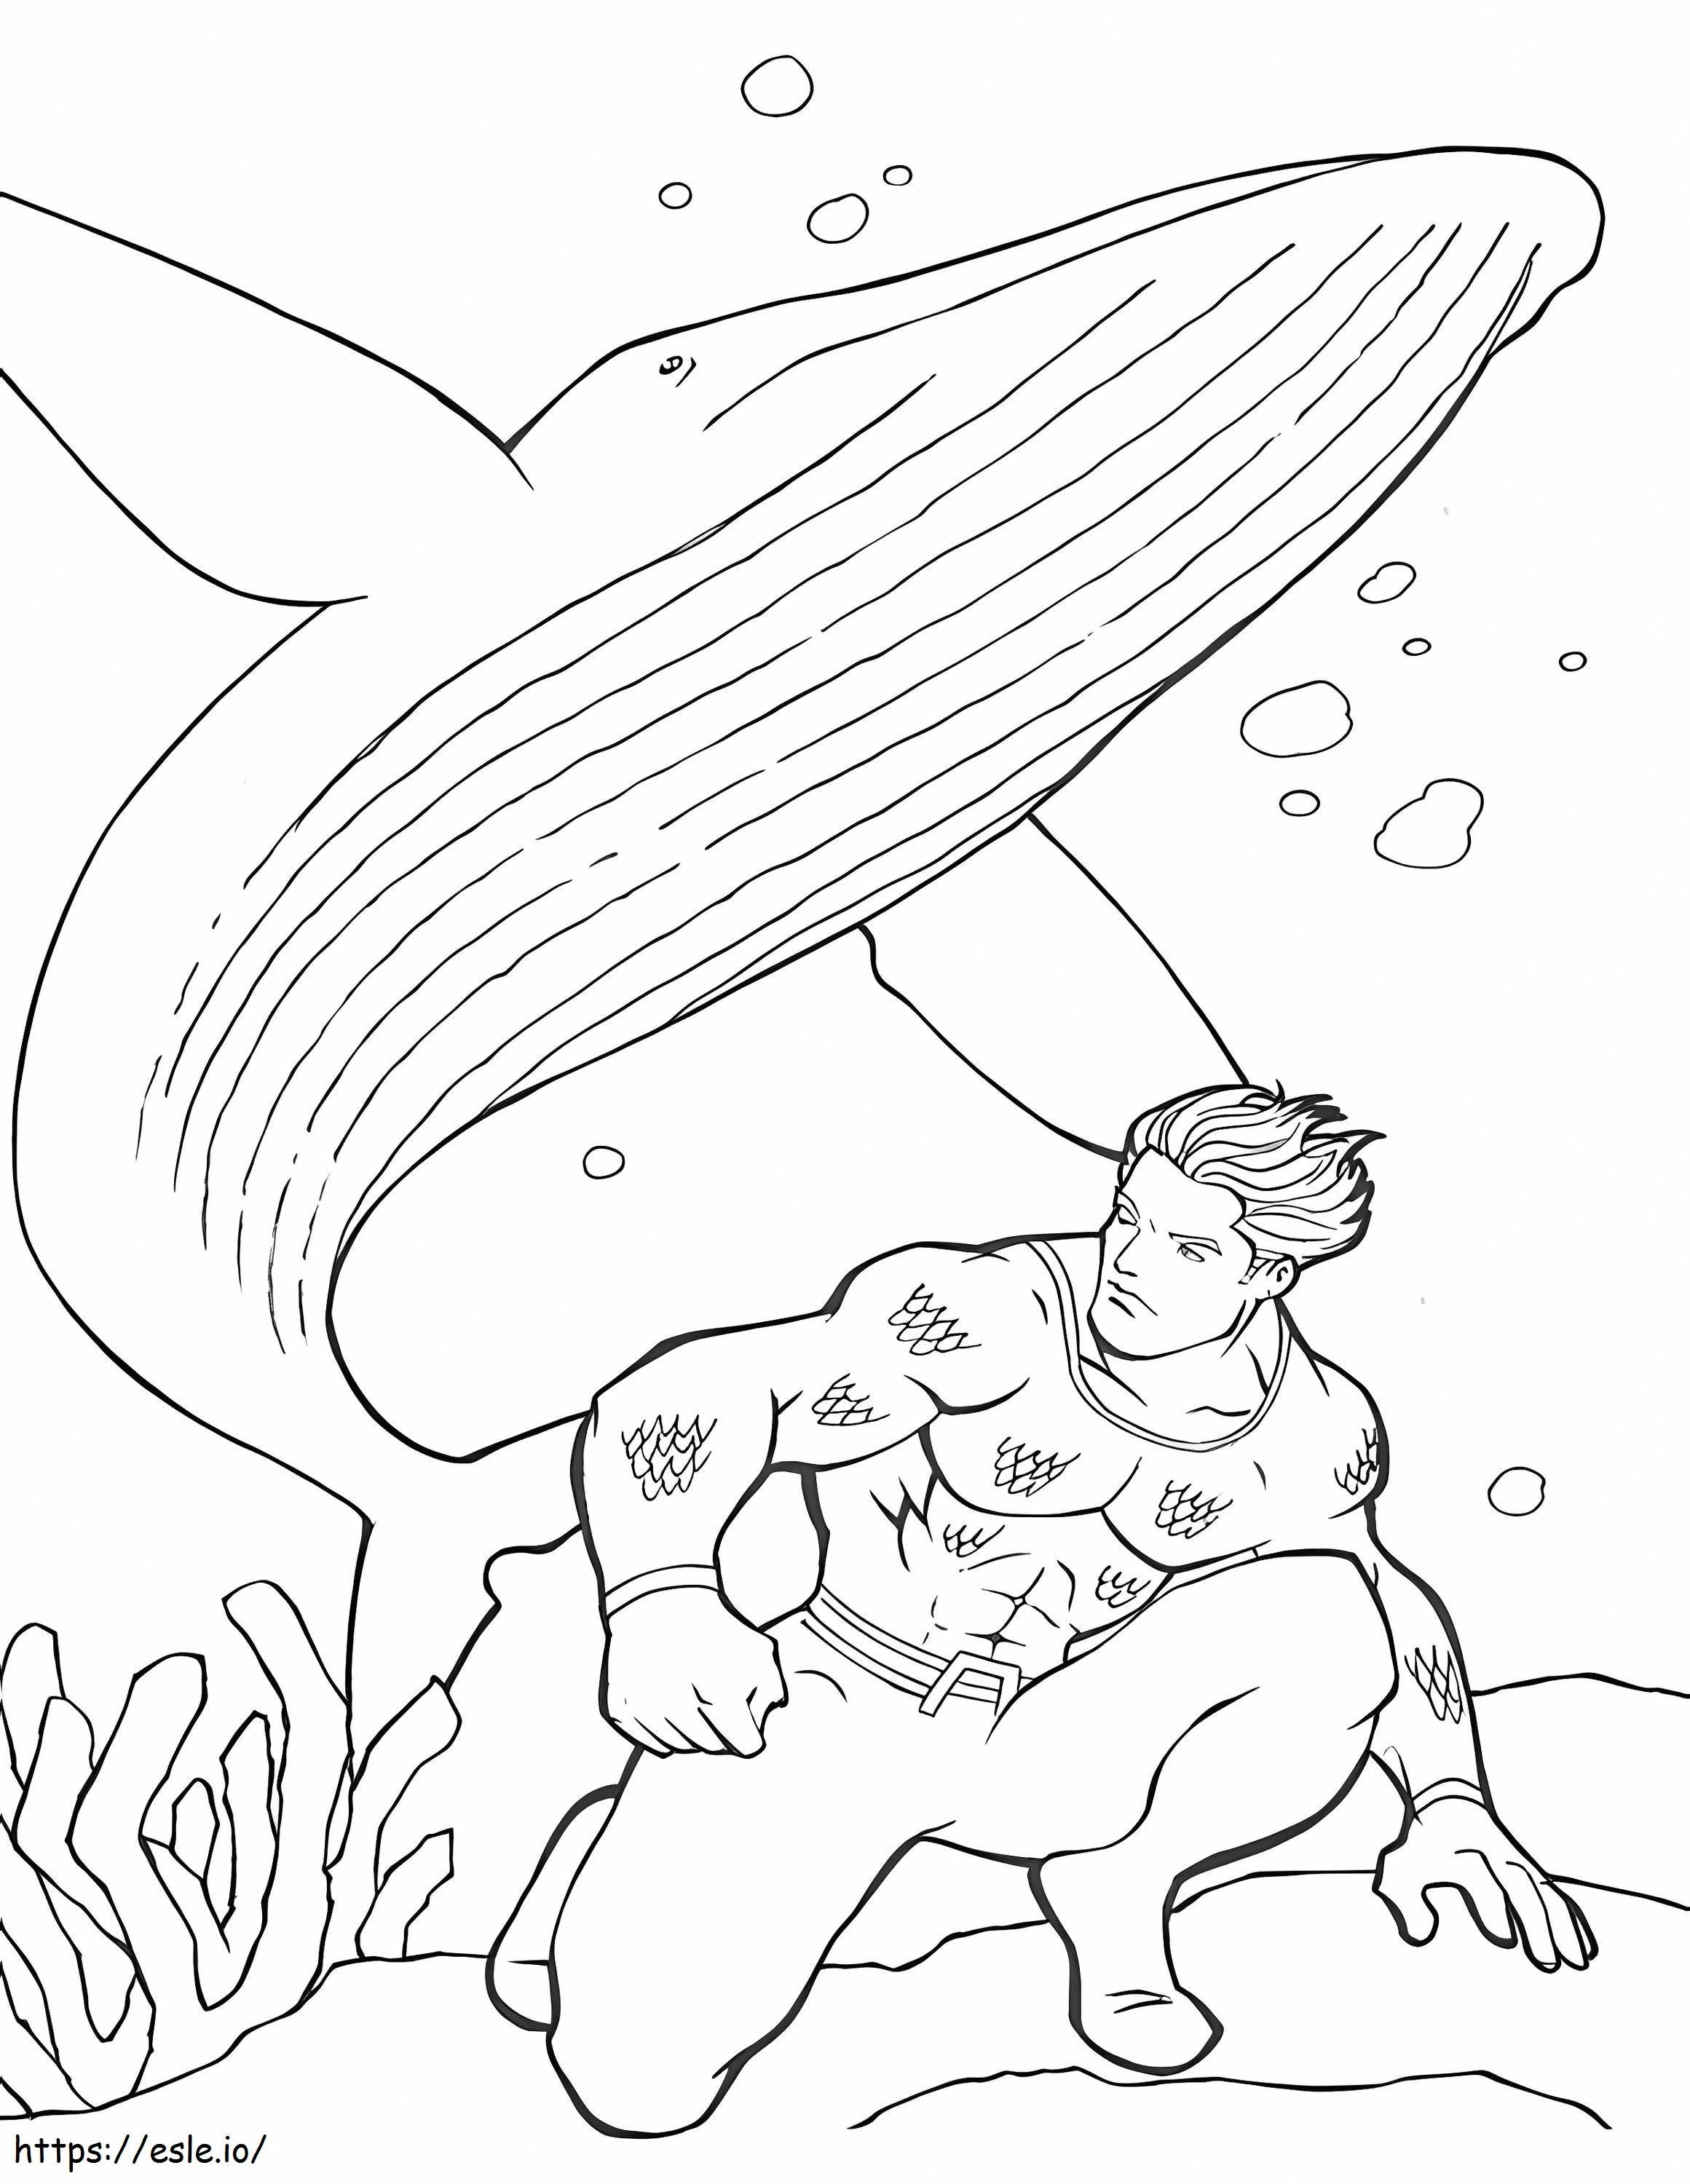 Aquaman i wieloryb kolorowanka